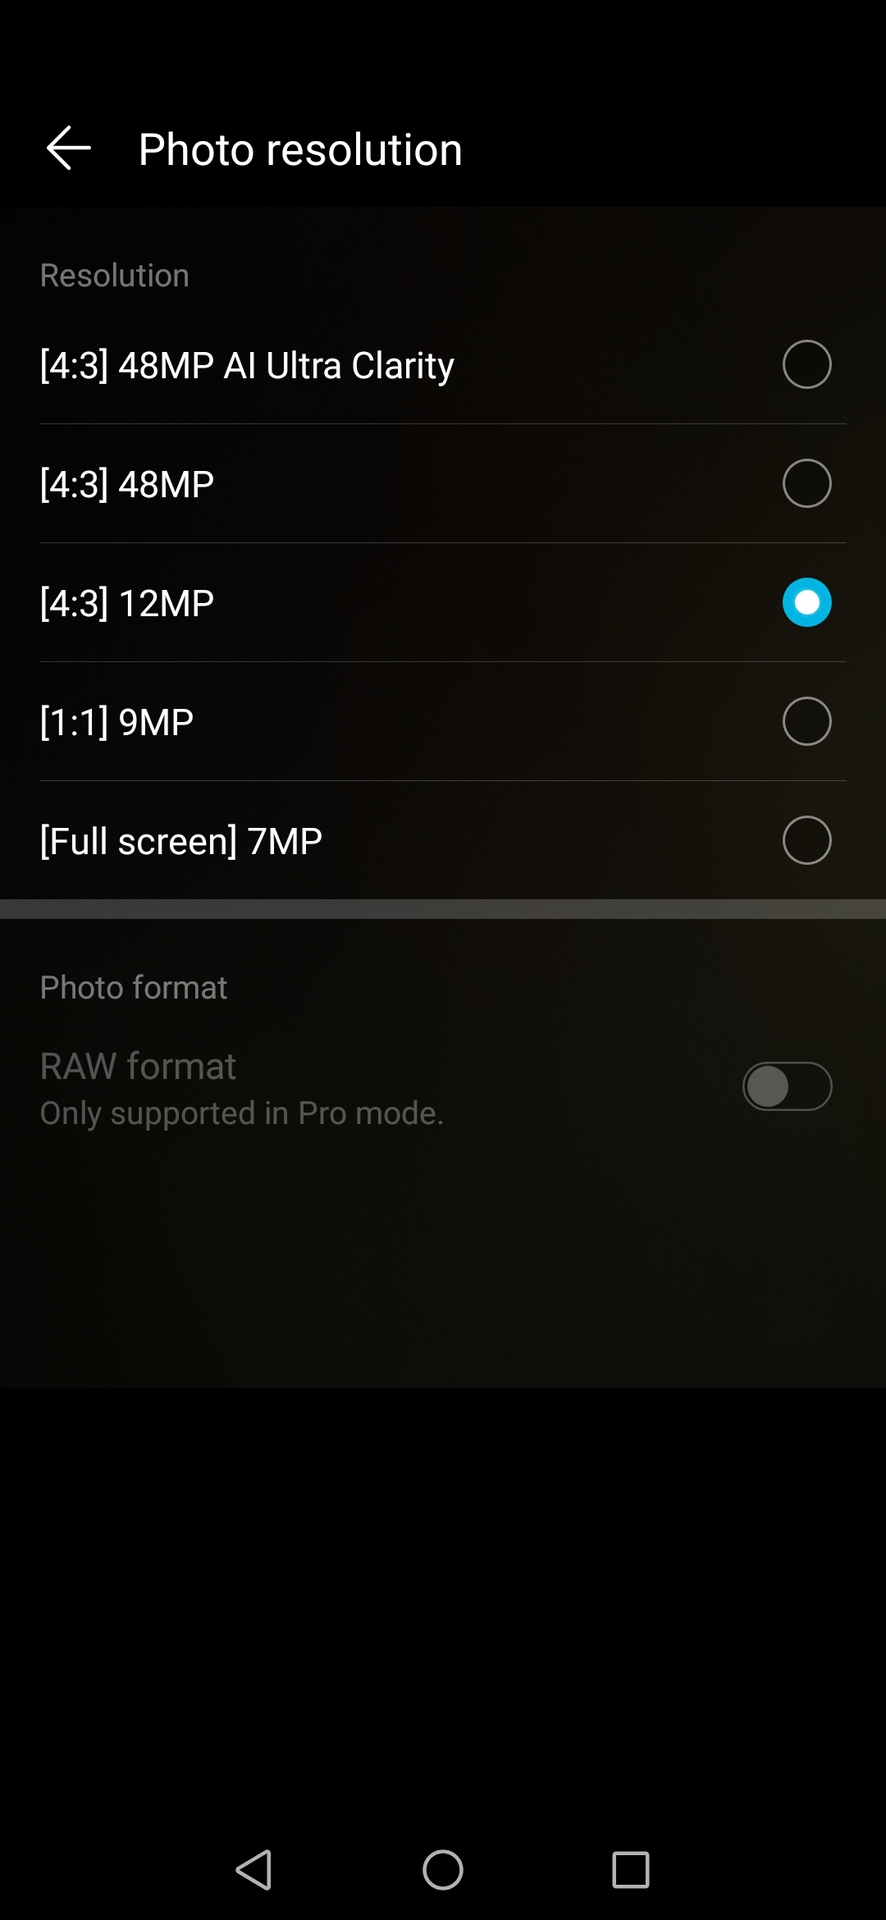 Honor 20 camera app resolution options screenshot